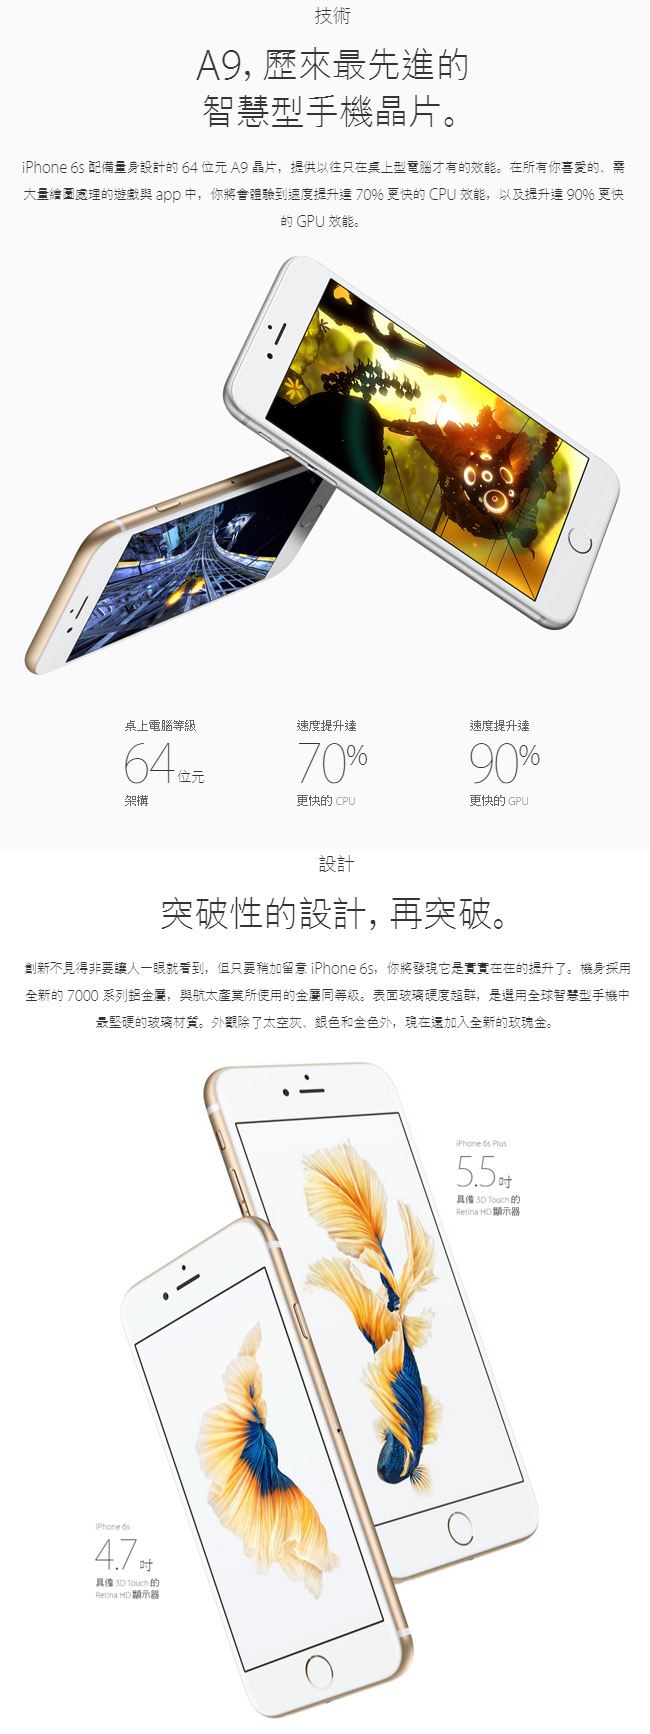 Apple iPhone 6s 32G 4.7吋智慧型手機